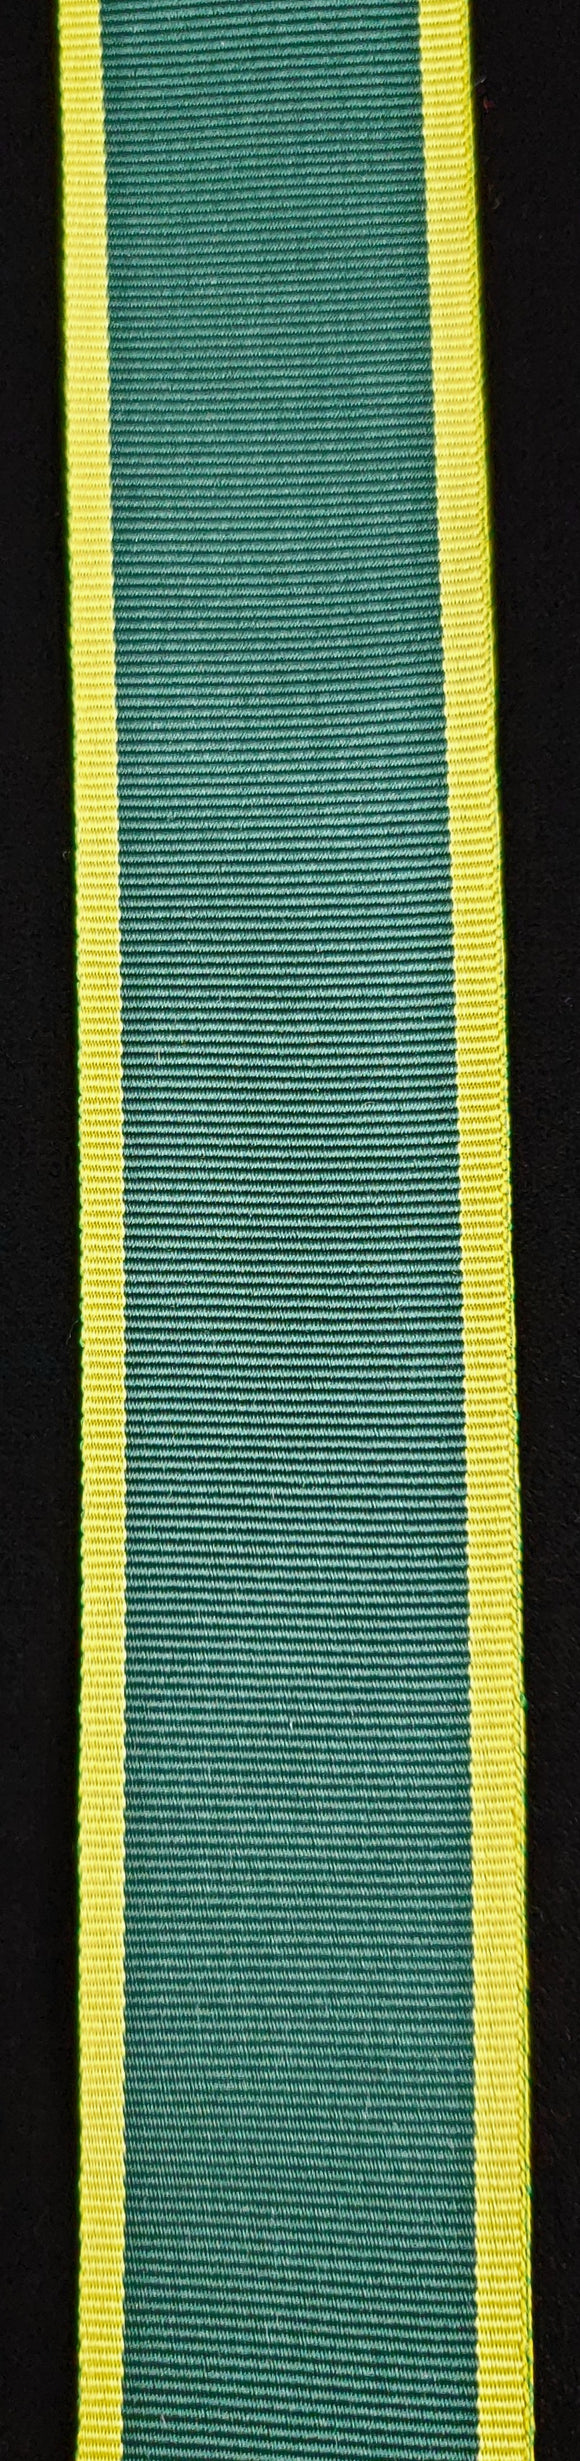 Ribbon, Efficiency Medal